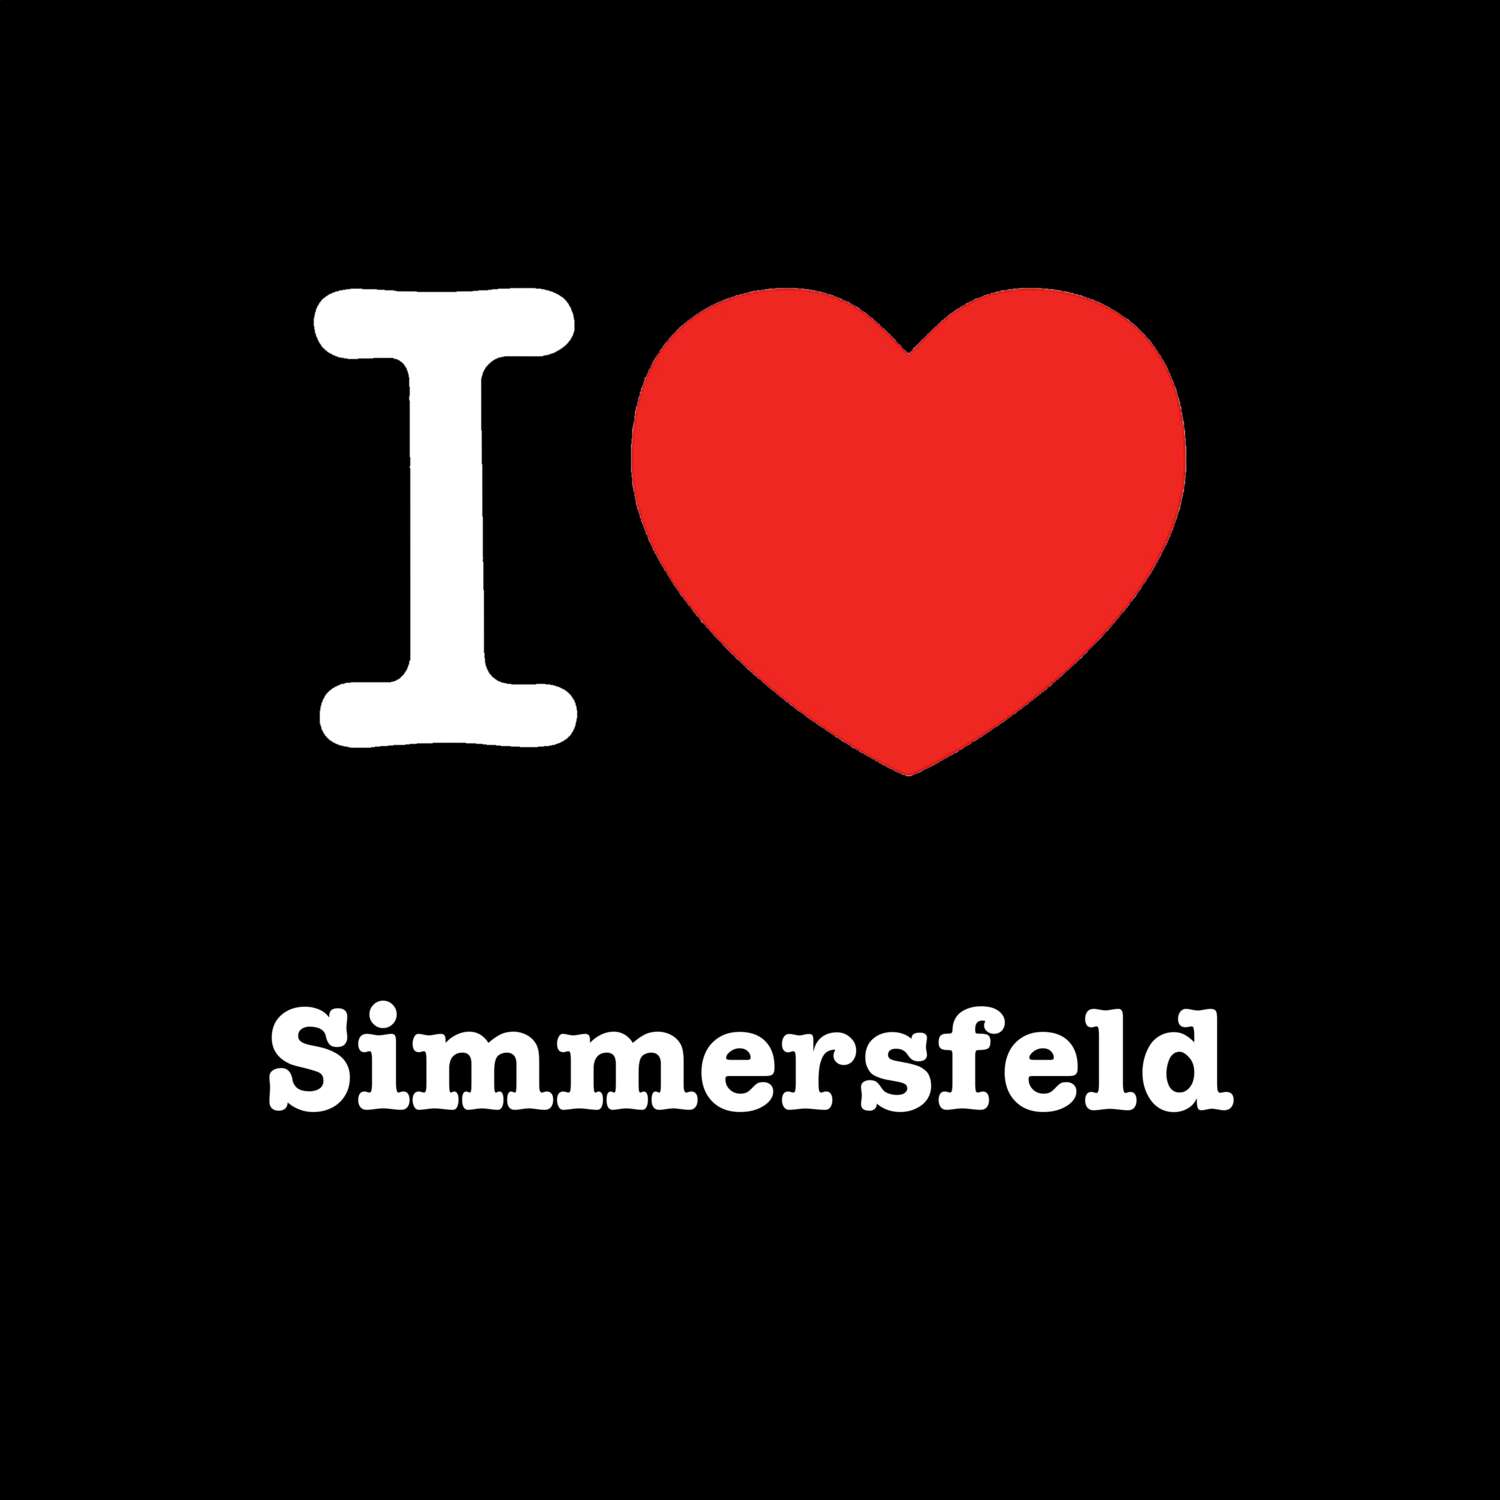 Simmersfeld T-Shirt »I love«